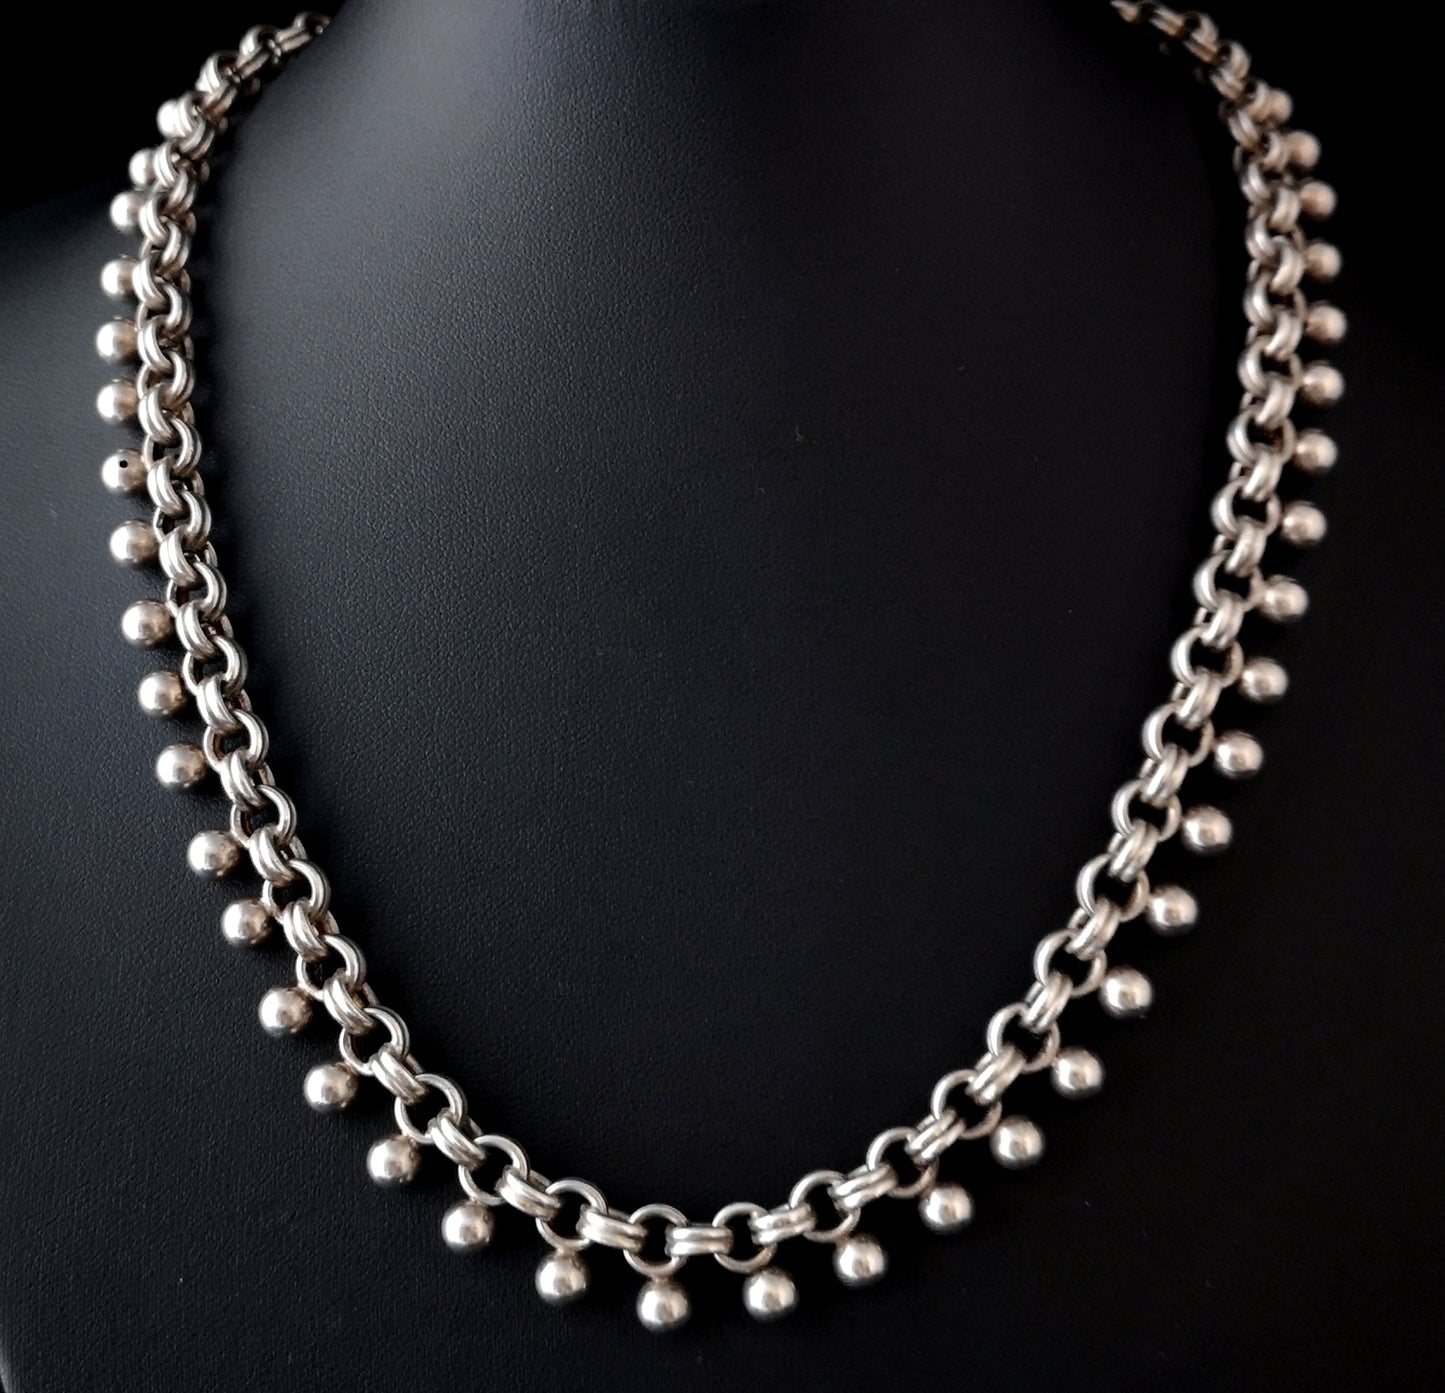 Antique Victorian silver book chain necklace